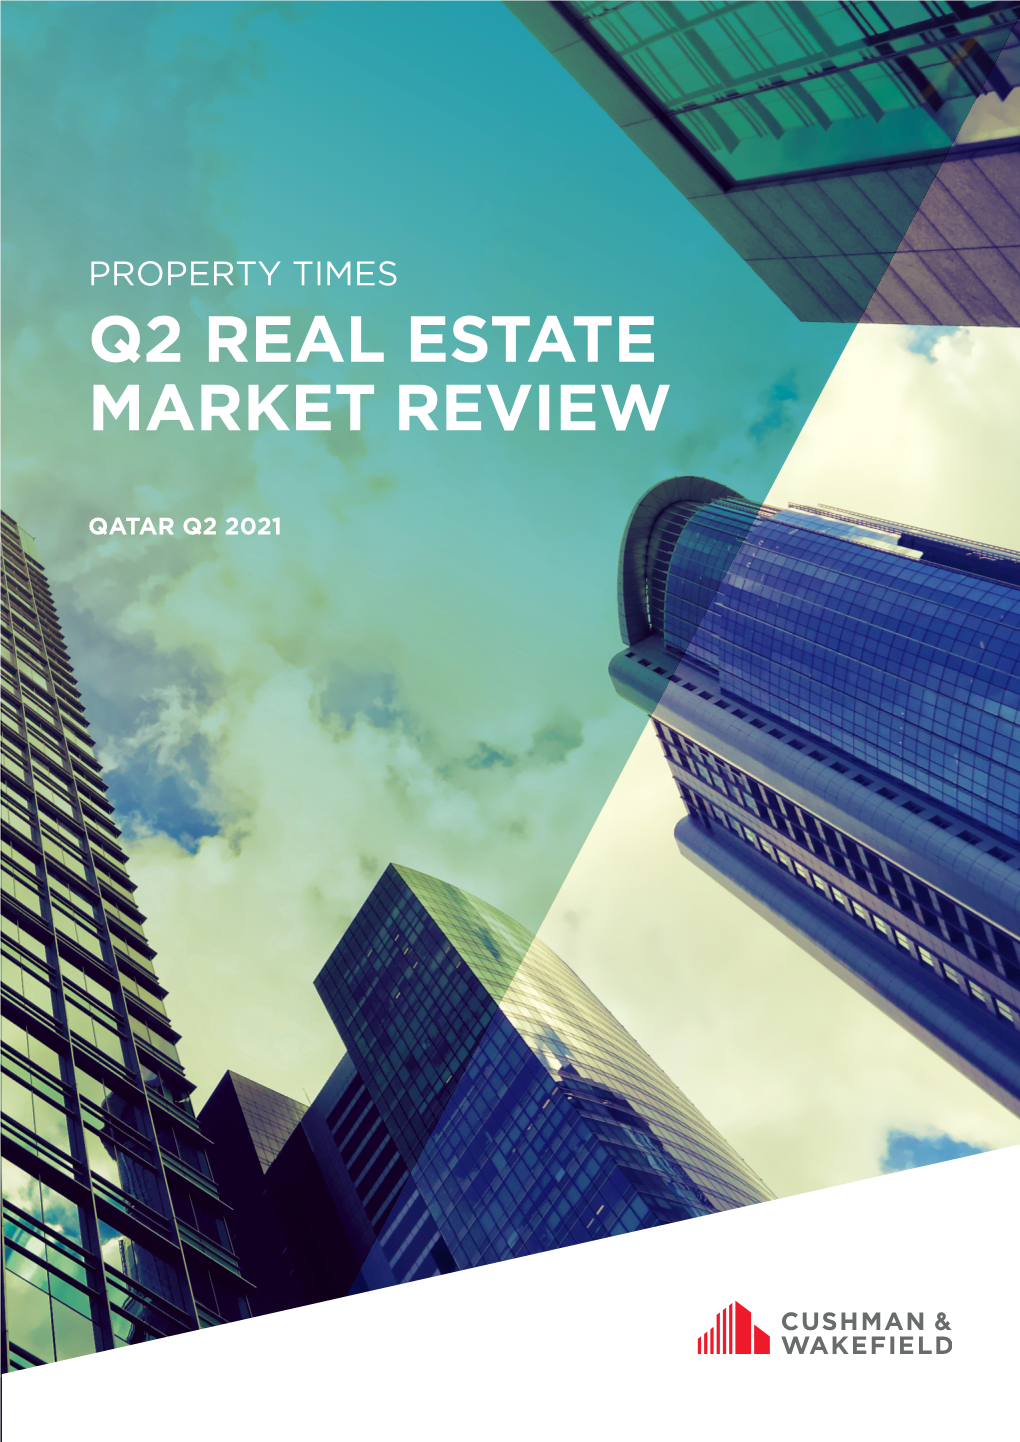 Q2 Real Estate Market Review